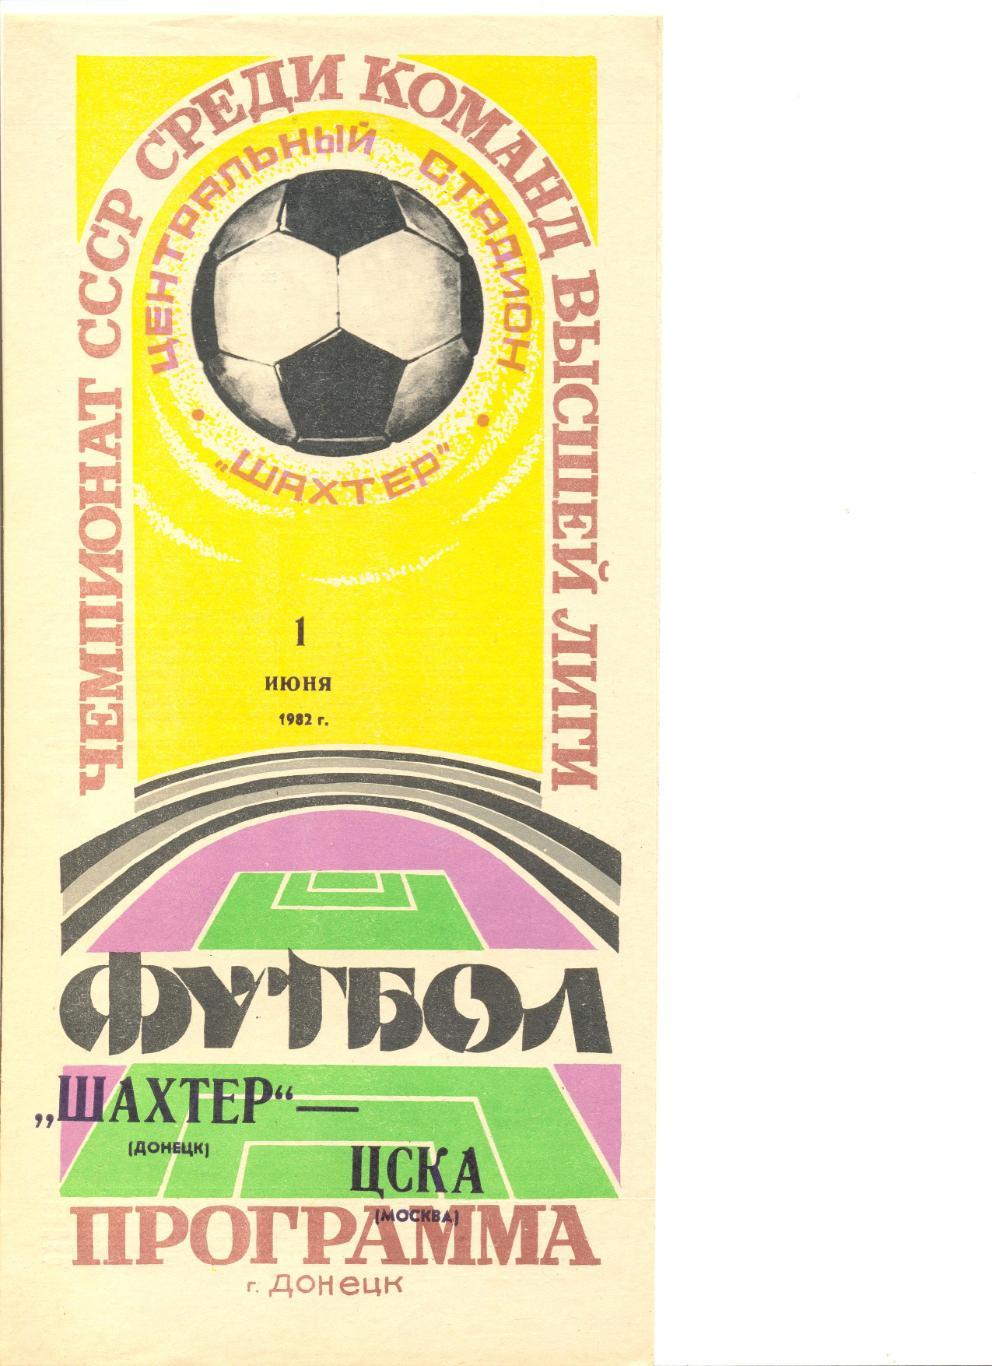 Шахтер Донецк - ЦСКА Москва 01.06.1982 г.